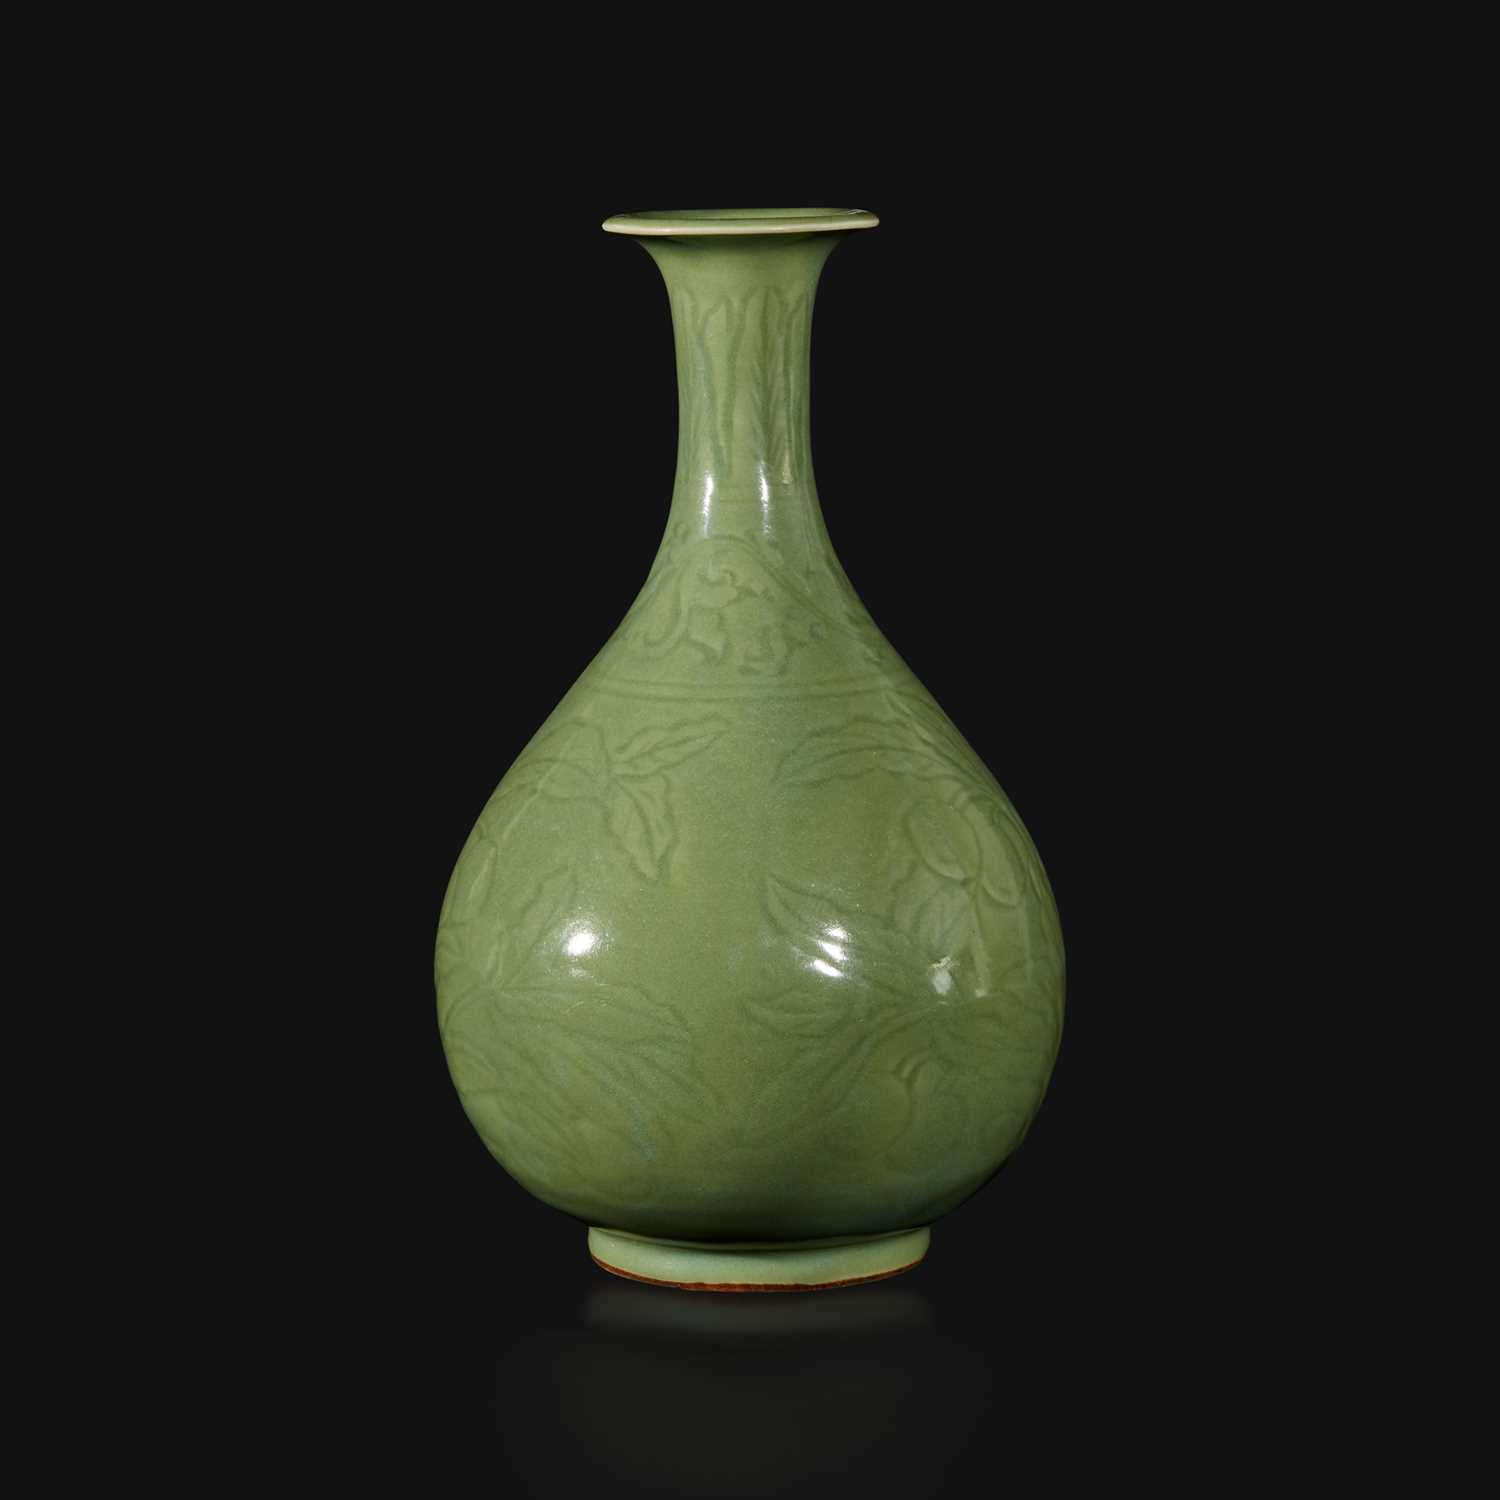 Lot 2 - A Chinese Longquan incised celadon-glazed bottle vase, Yuhuchunping